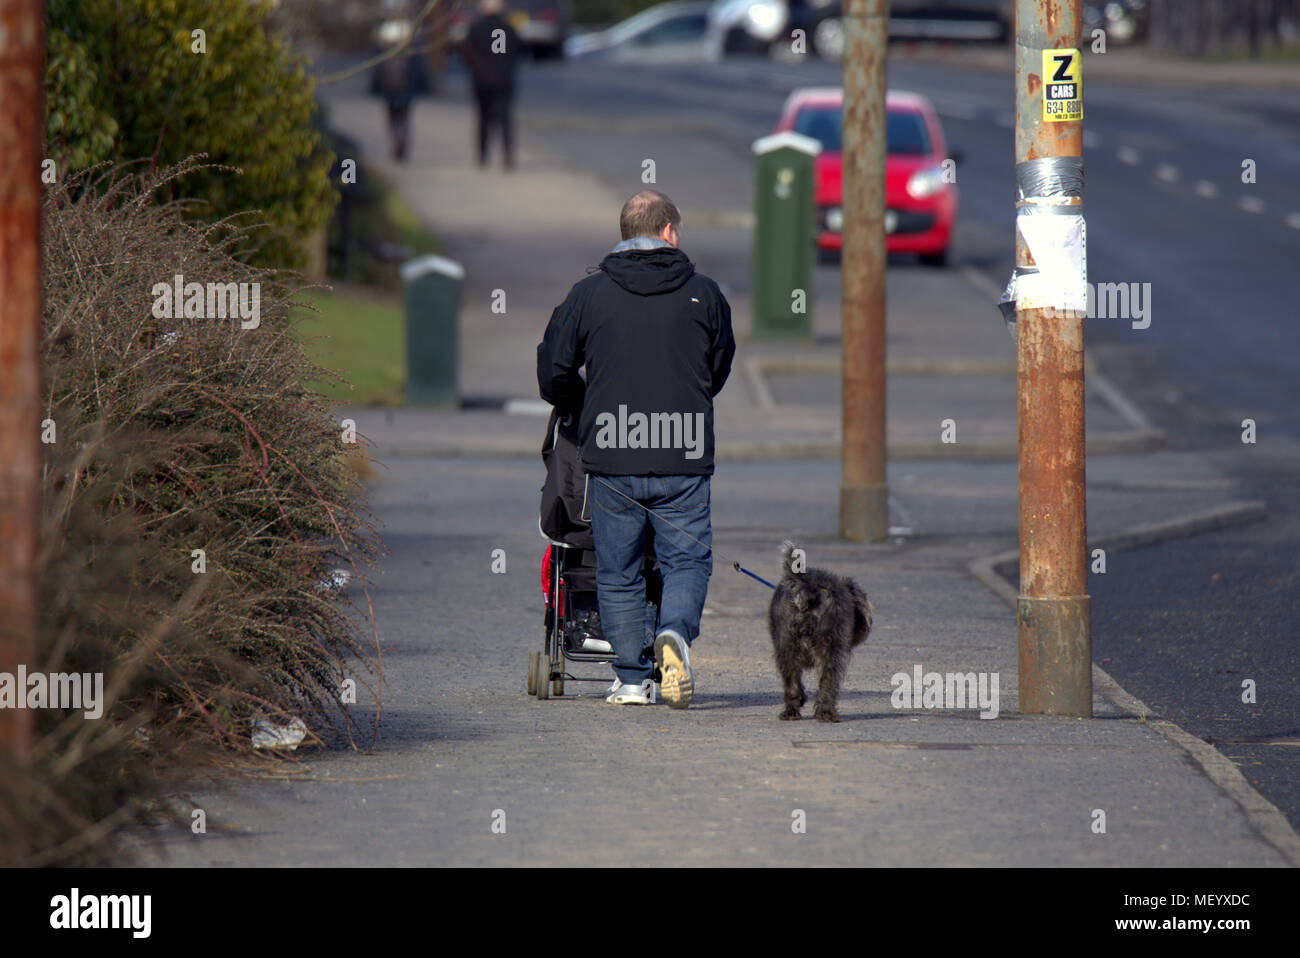 local people man pushing pram  on street pavement sidewalk walking dog Castlemilk, Glasgow, UK Stock Photo